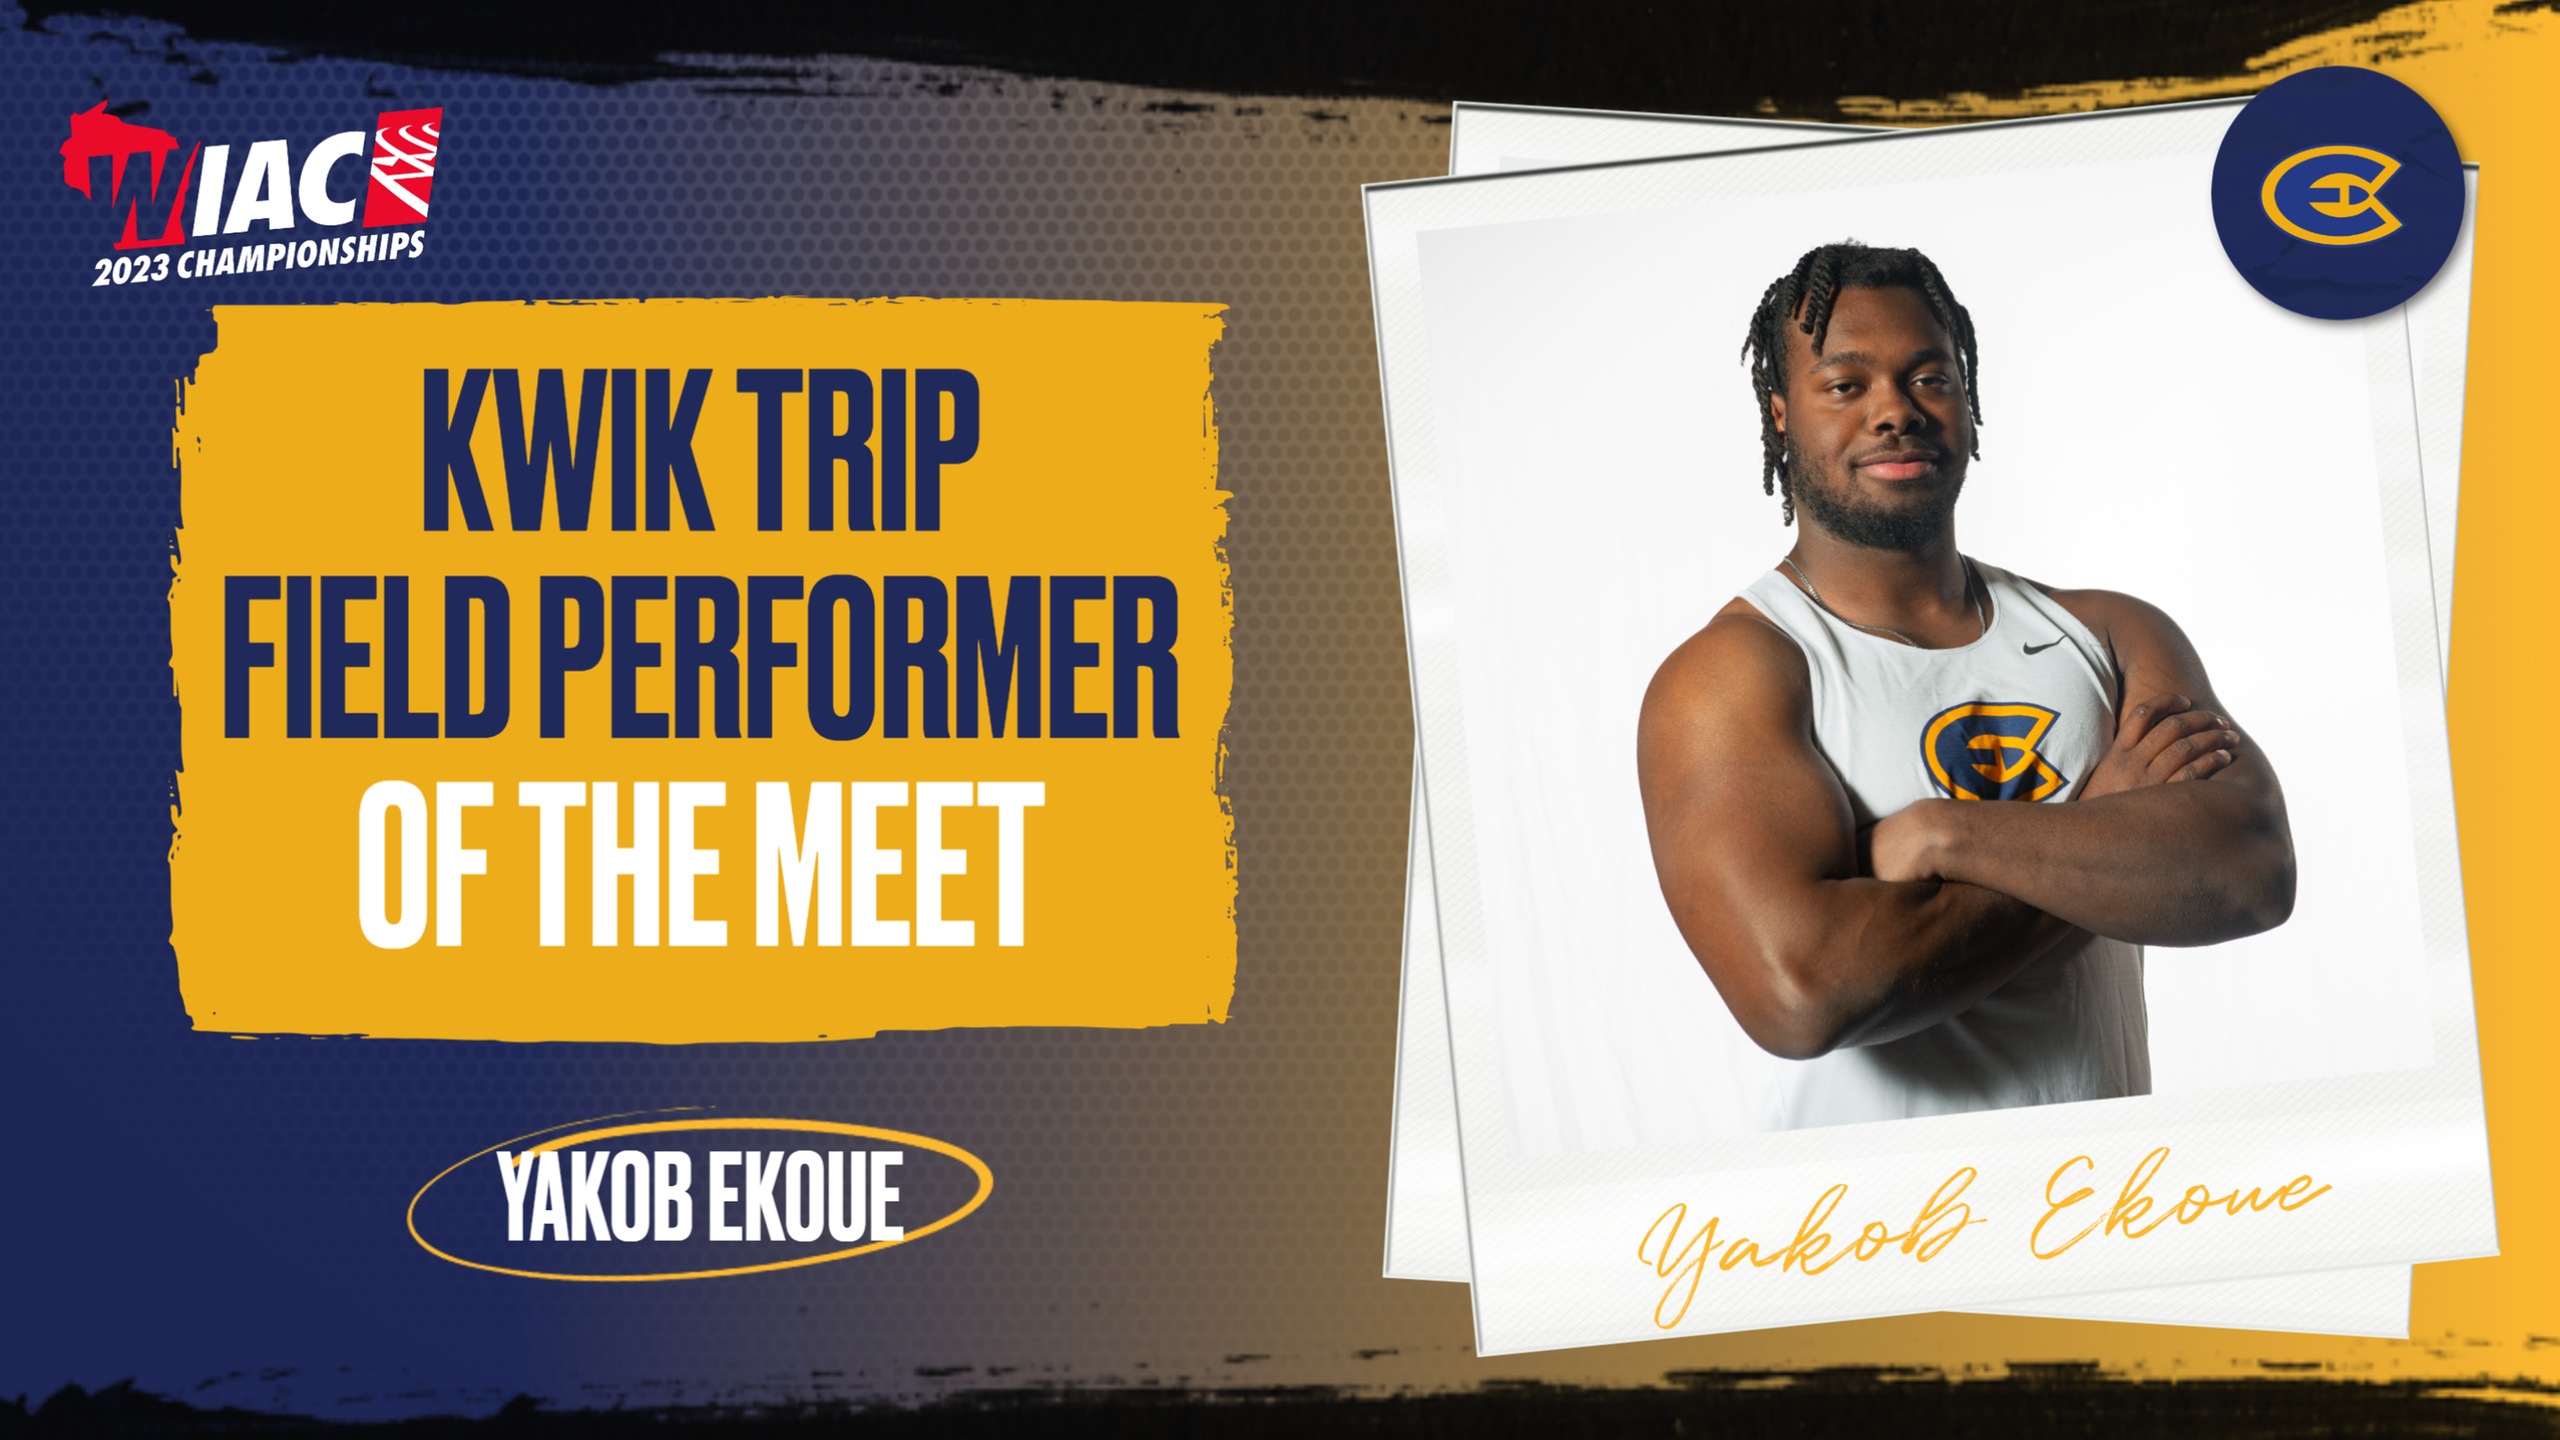 Ekoue Earns Kwik Trip Field Performer of the Meet at WIAC Championships